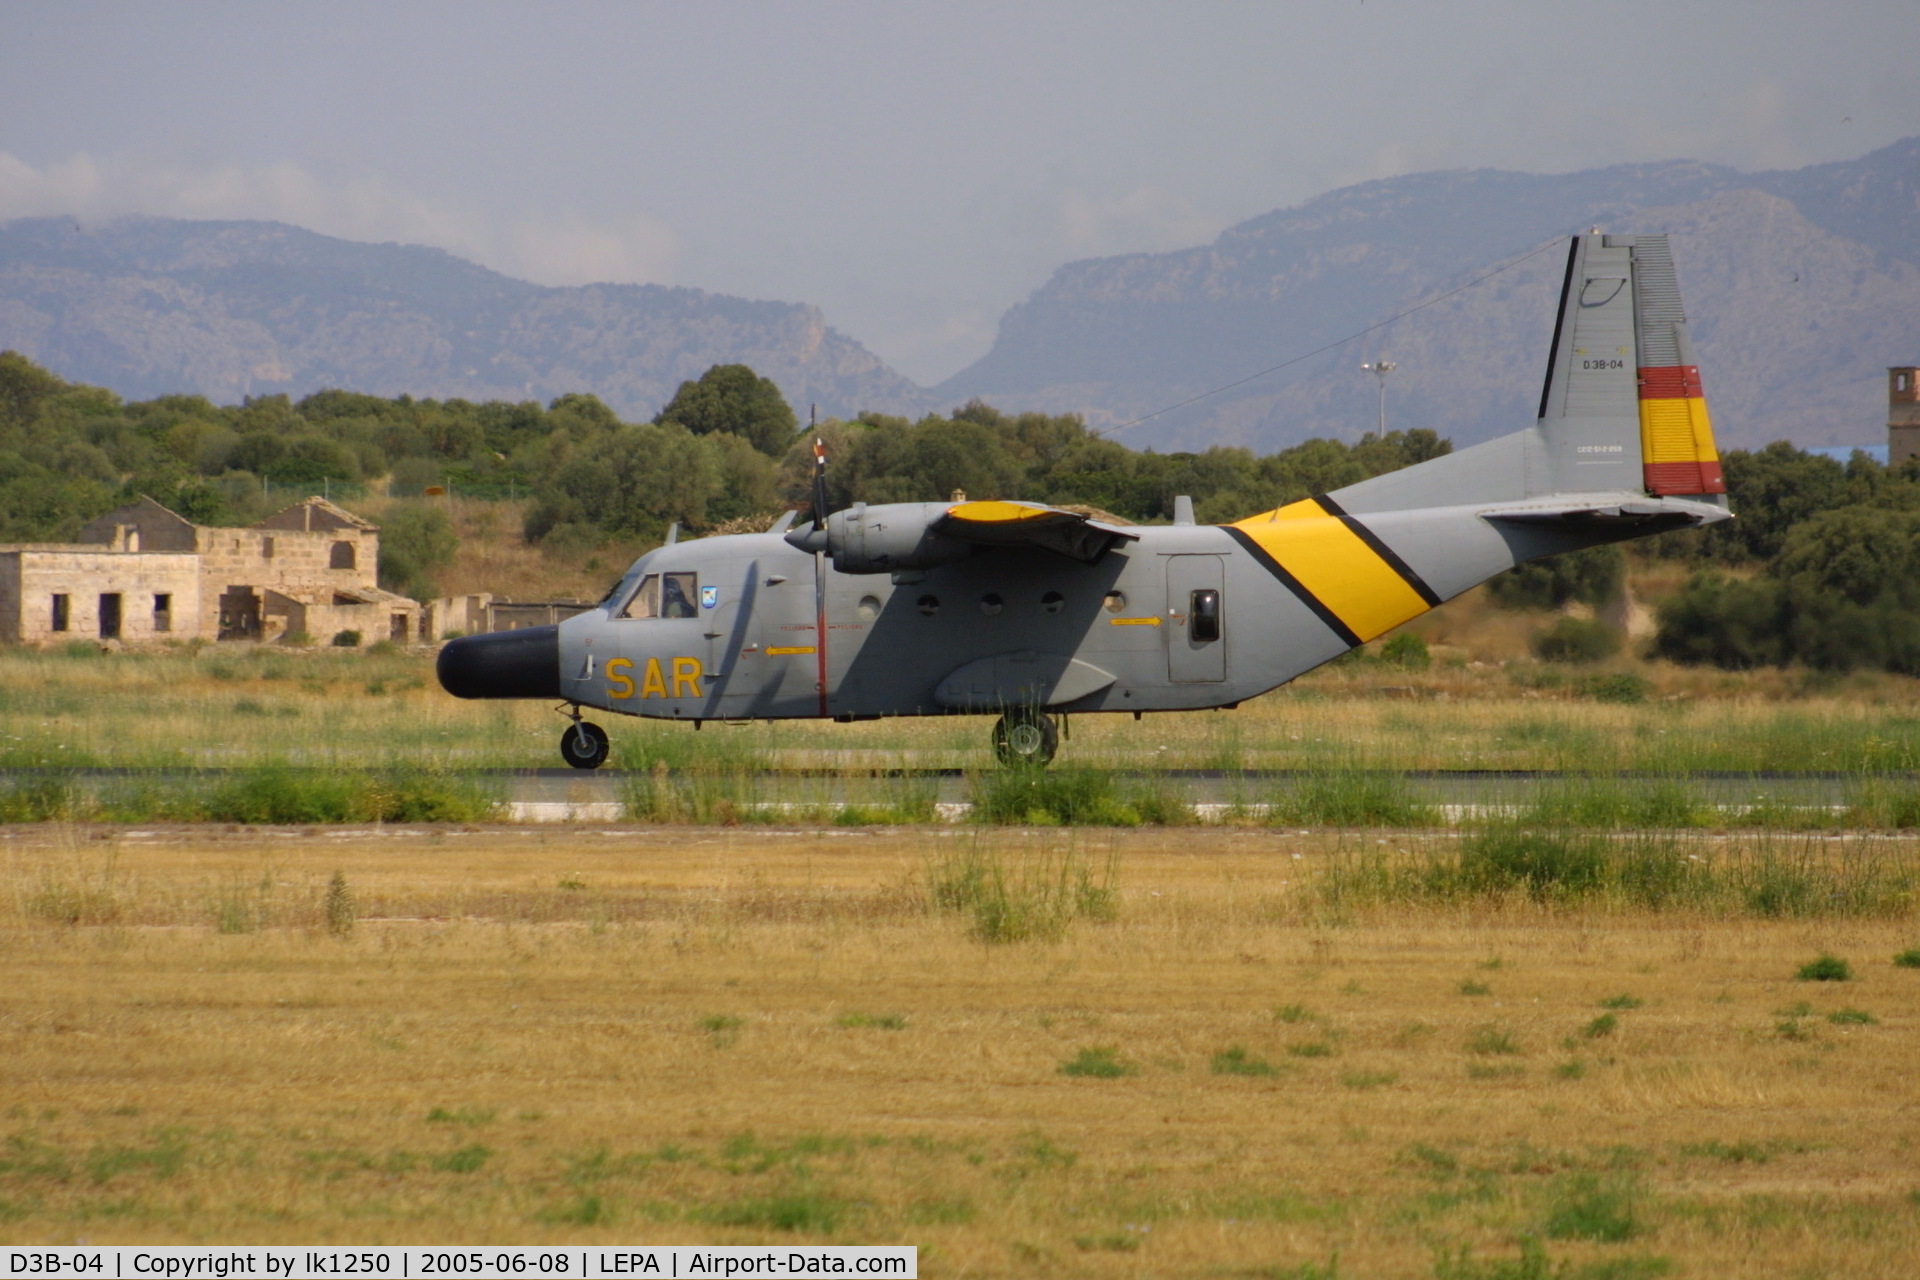 D3B-04, CASA C212-200 C/N 259, Landed at Palma de Mallorca on June 8 2005